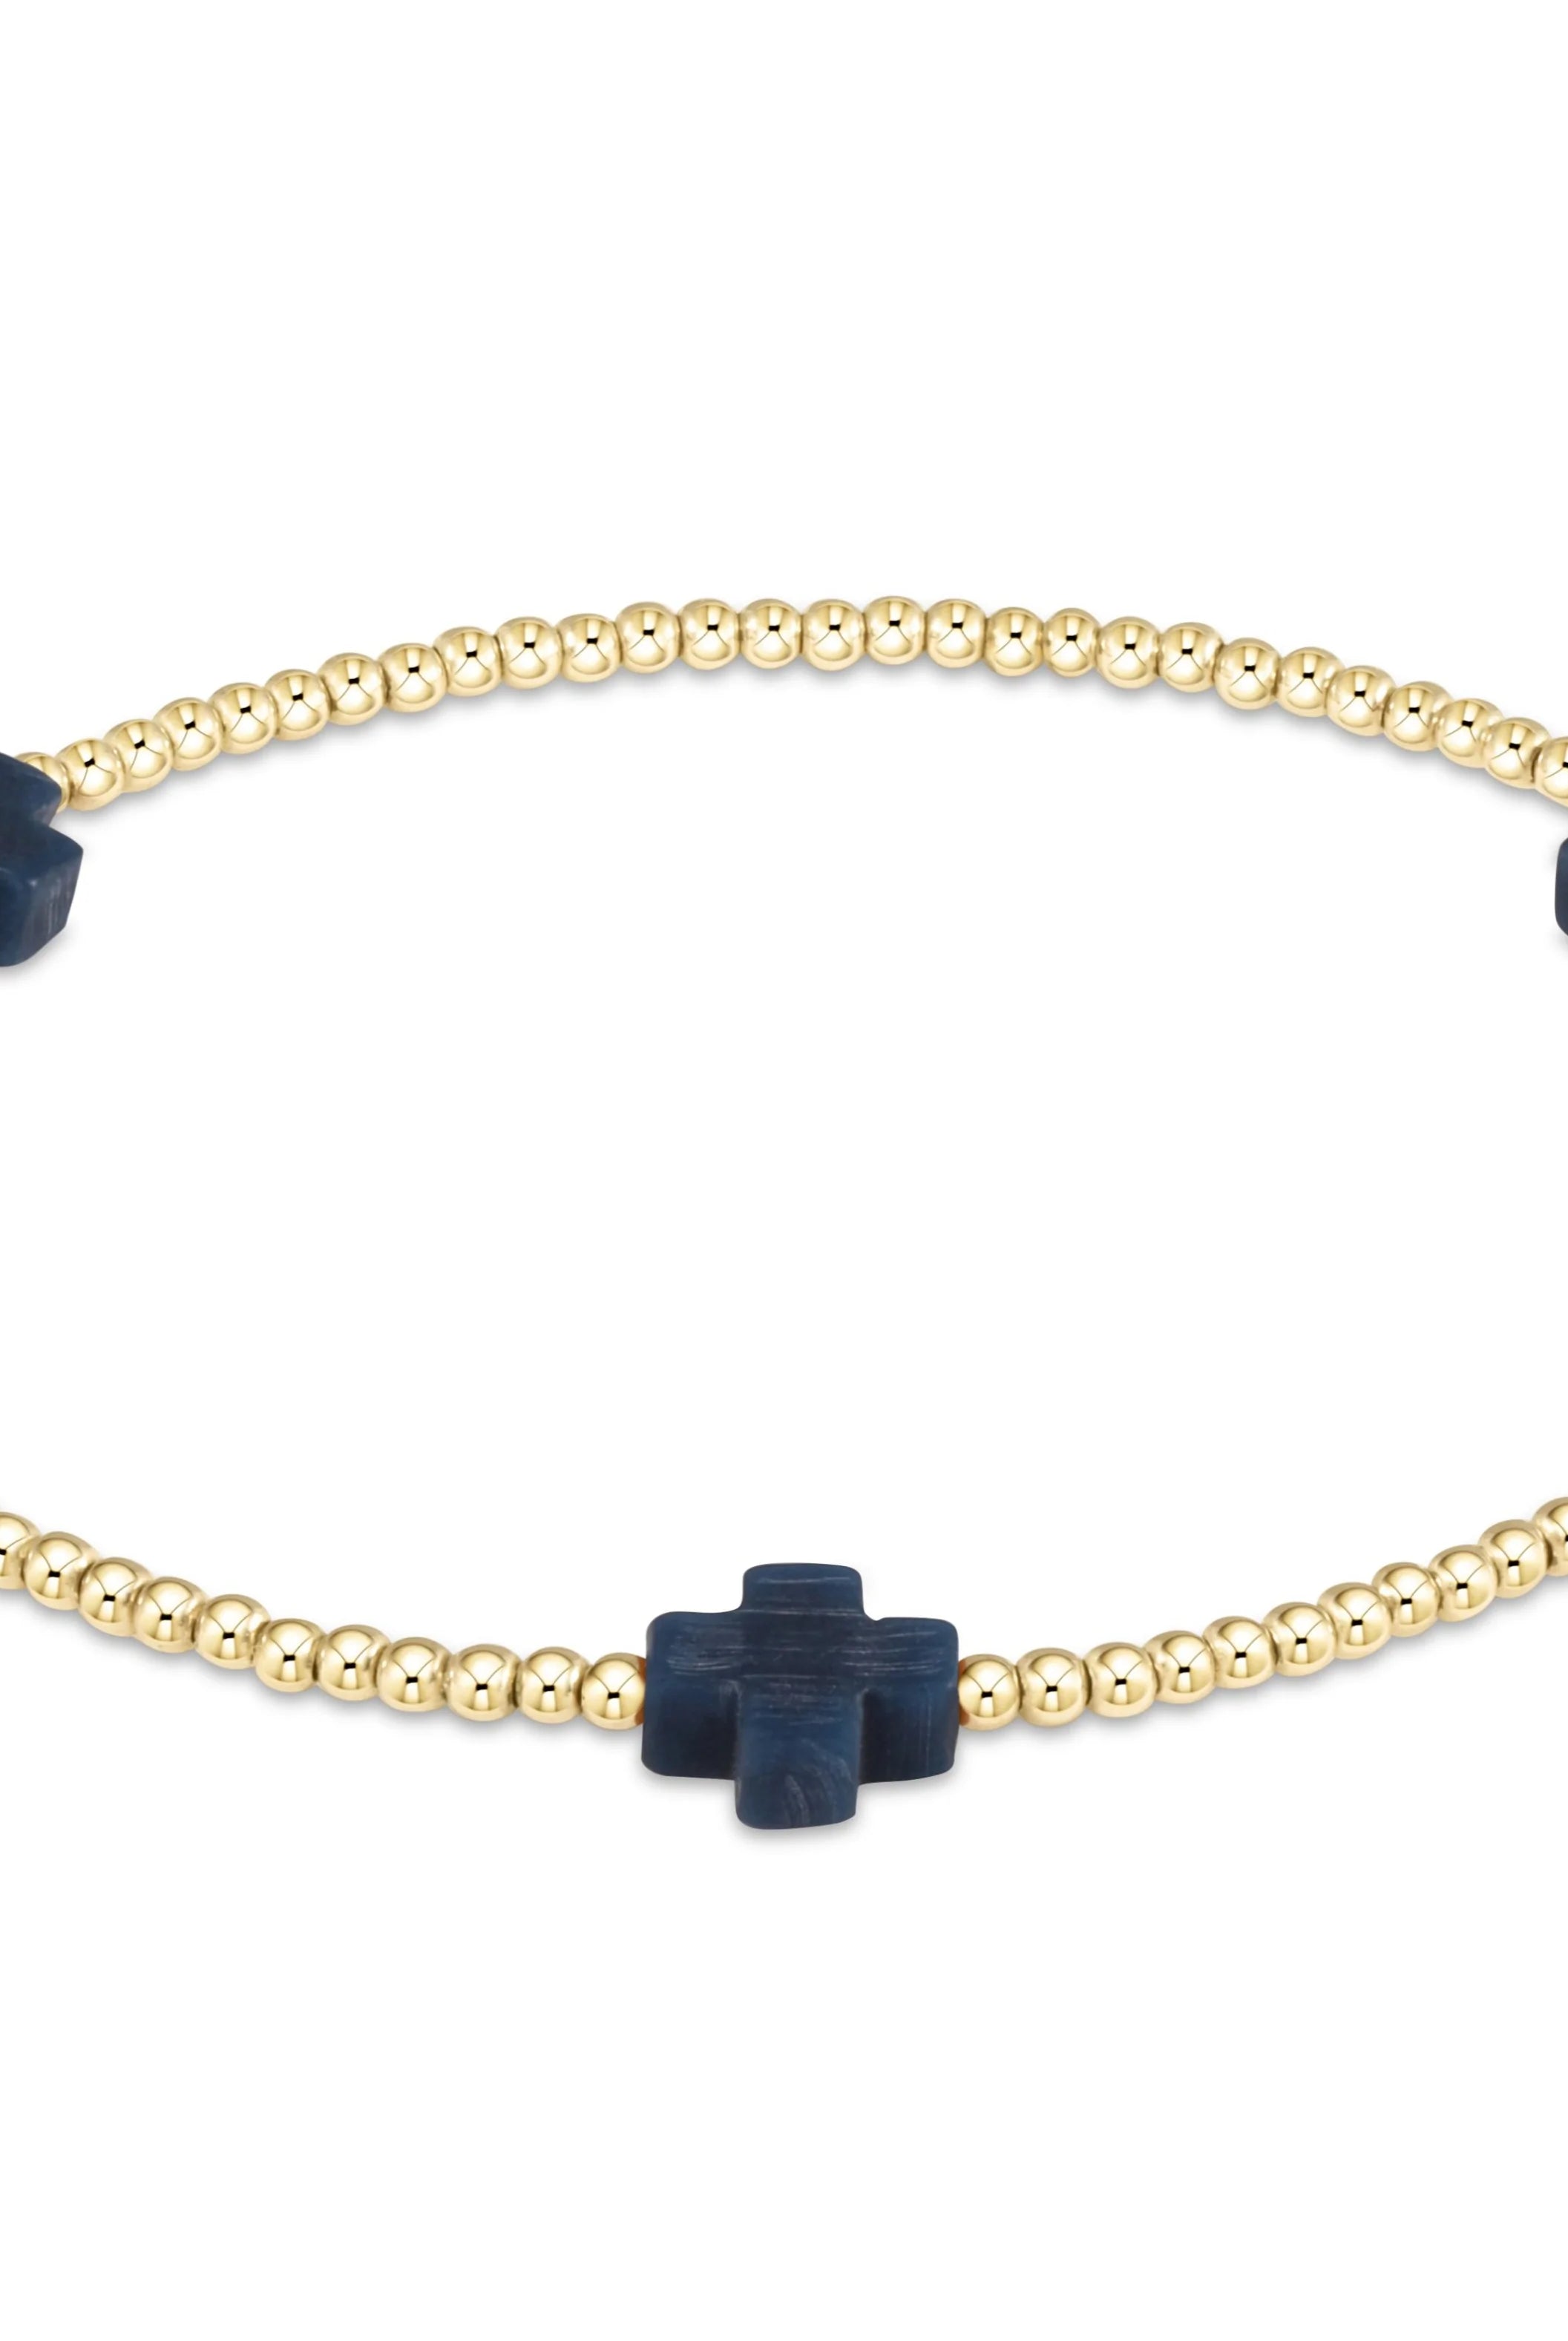 Signature Cross Gold 2mm Bracelet-Bracelets-eNewton-The Lovely Closet, Women's Fashion Boutique in Alexandria, KY